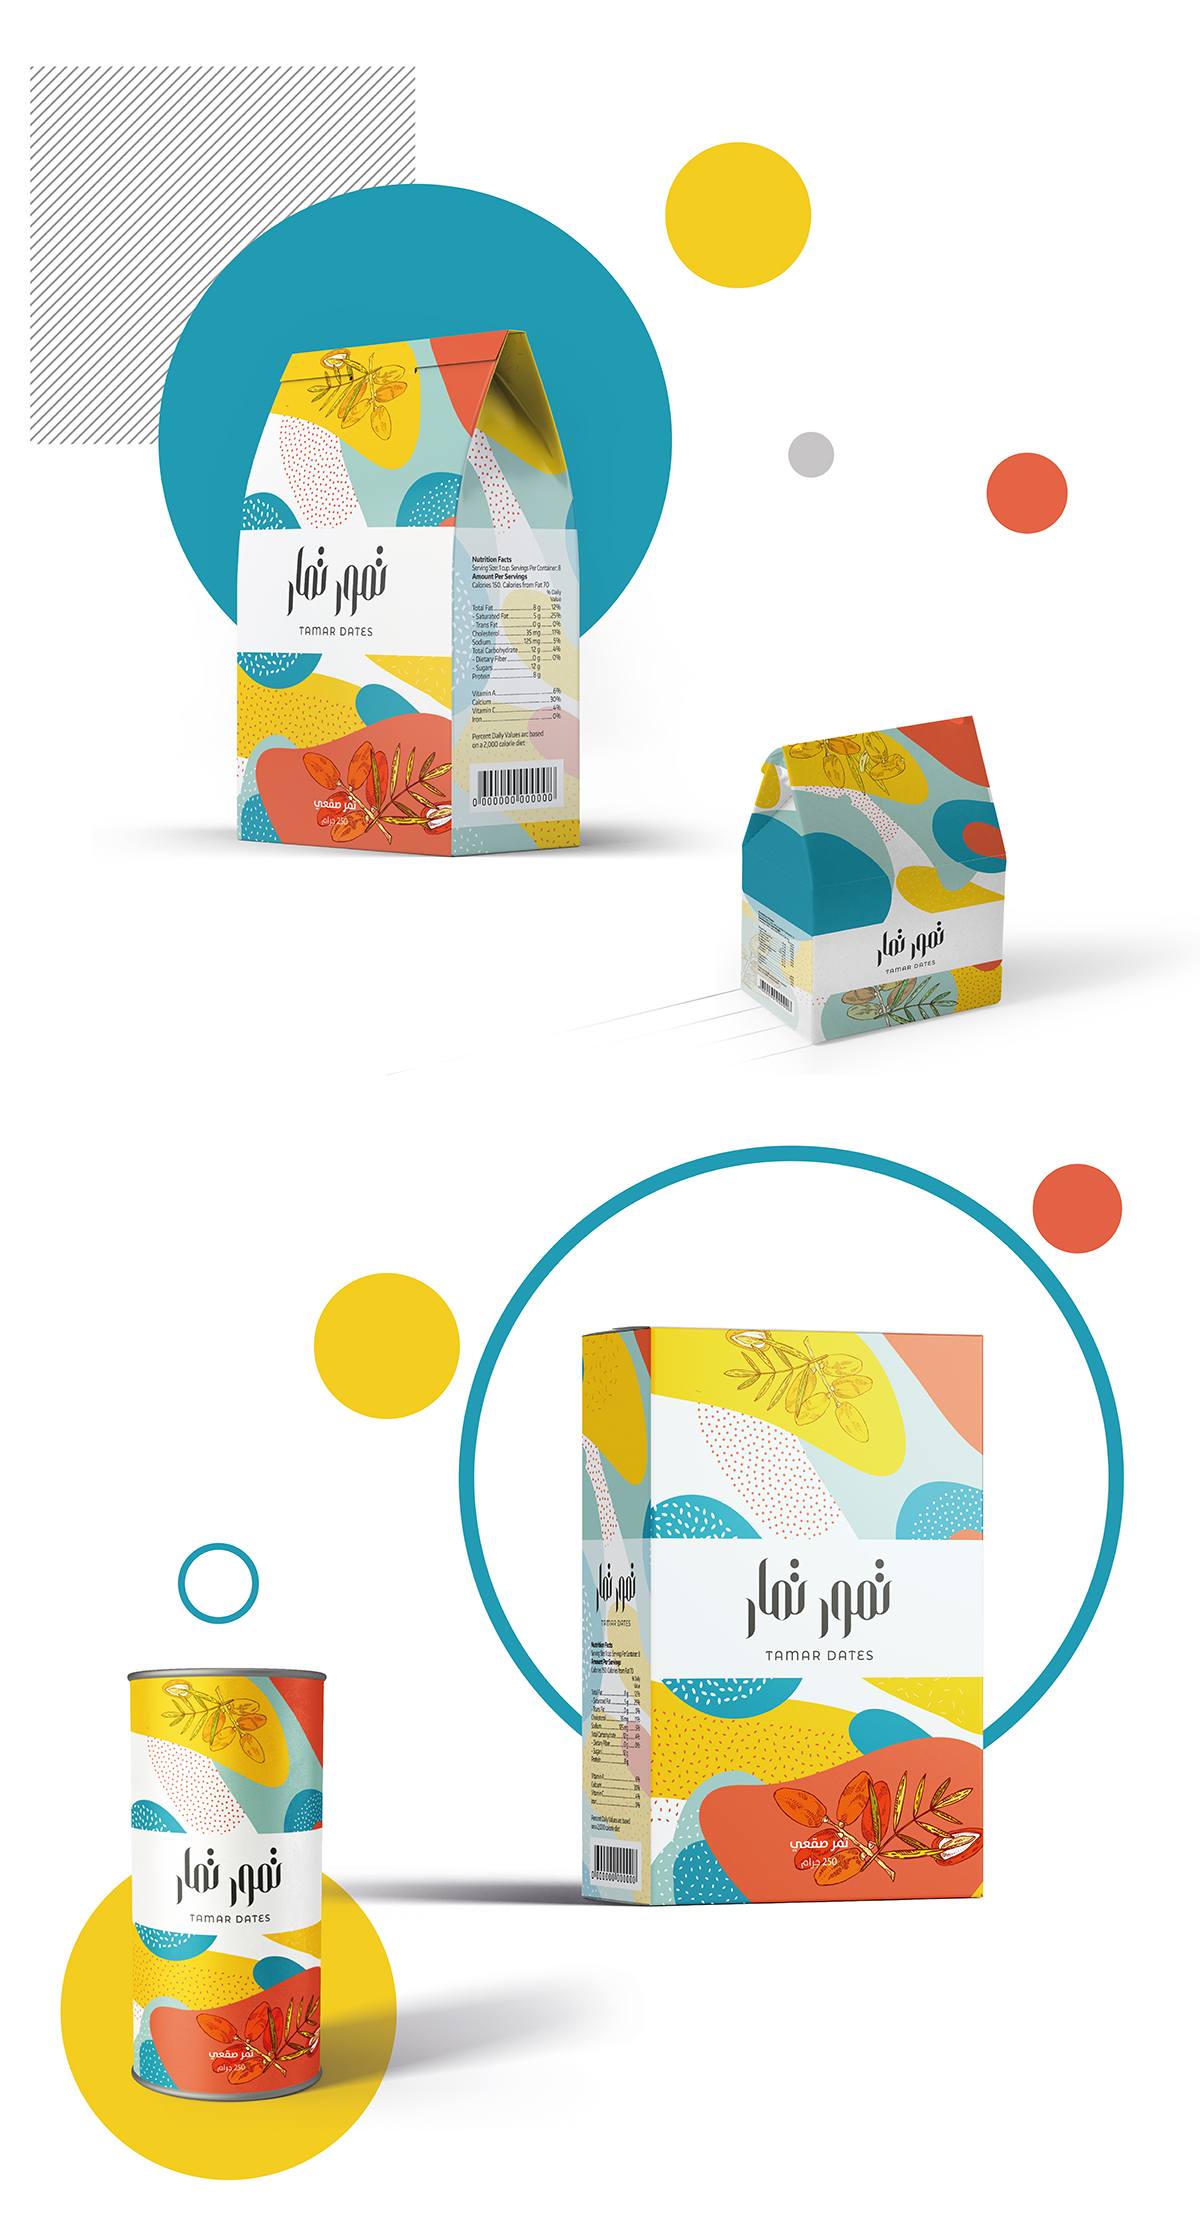 Tamar Dates Packaging Design Created by Malah Art